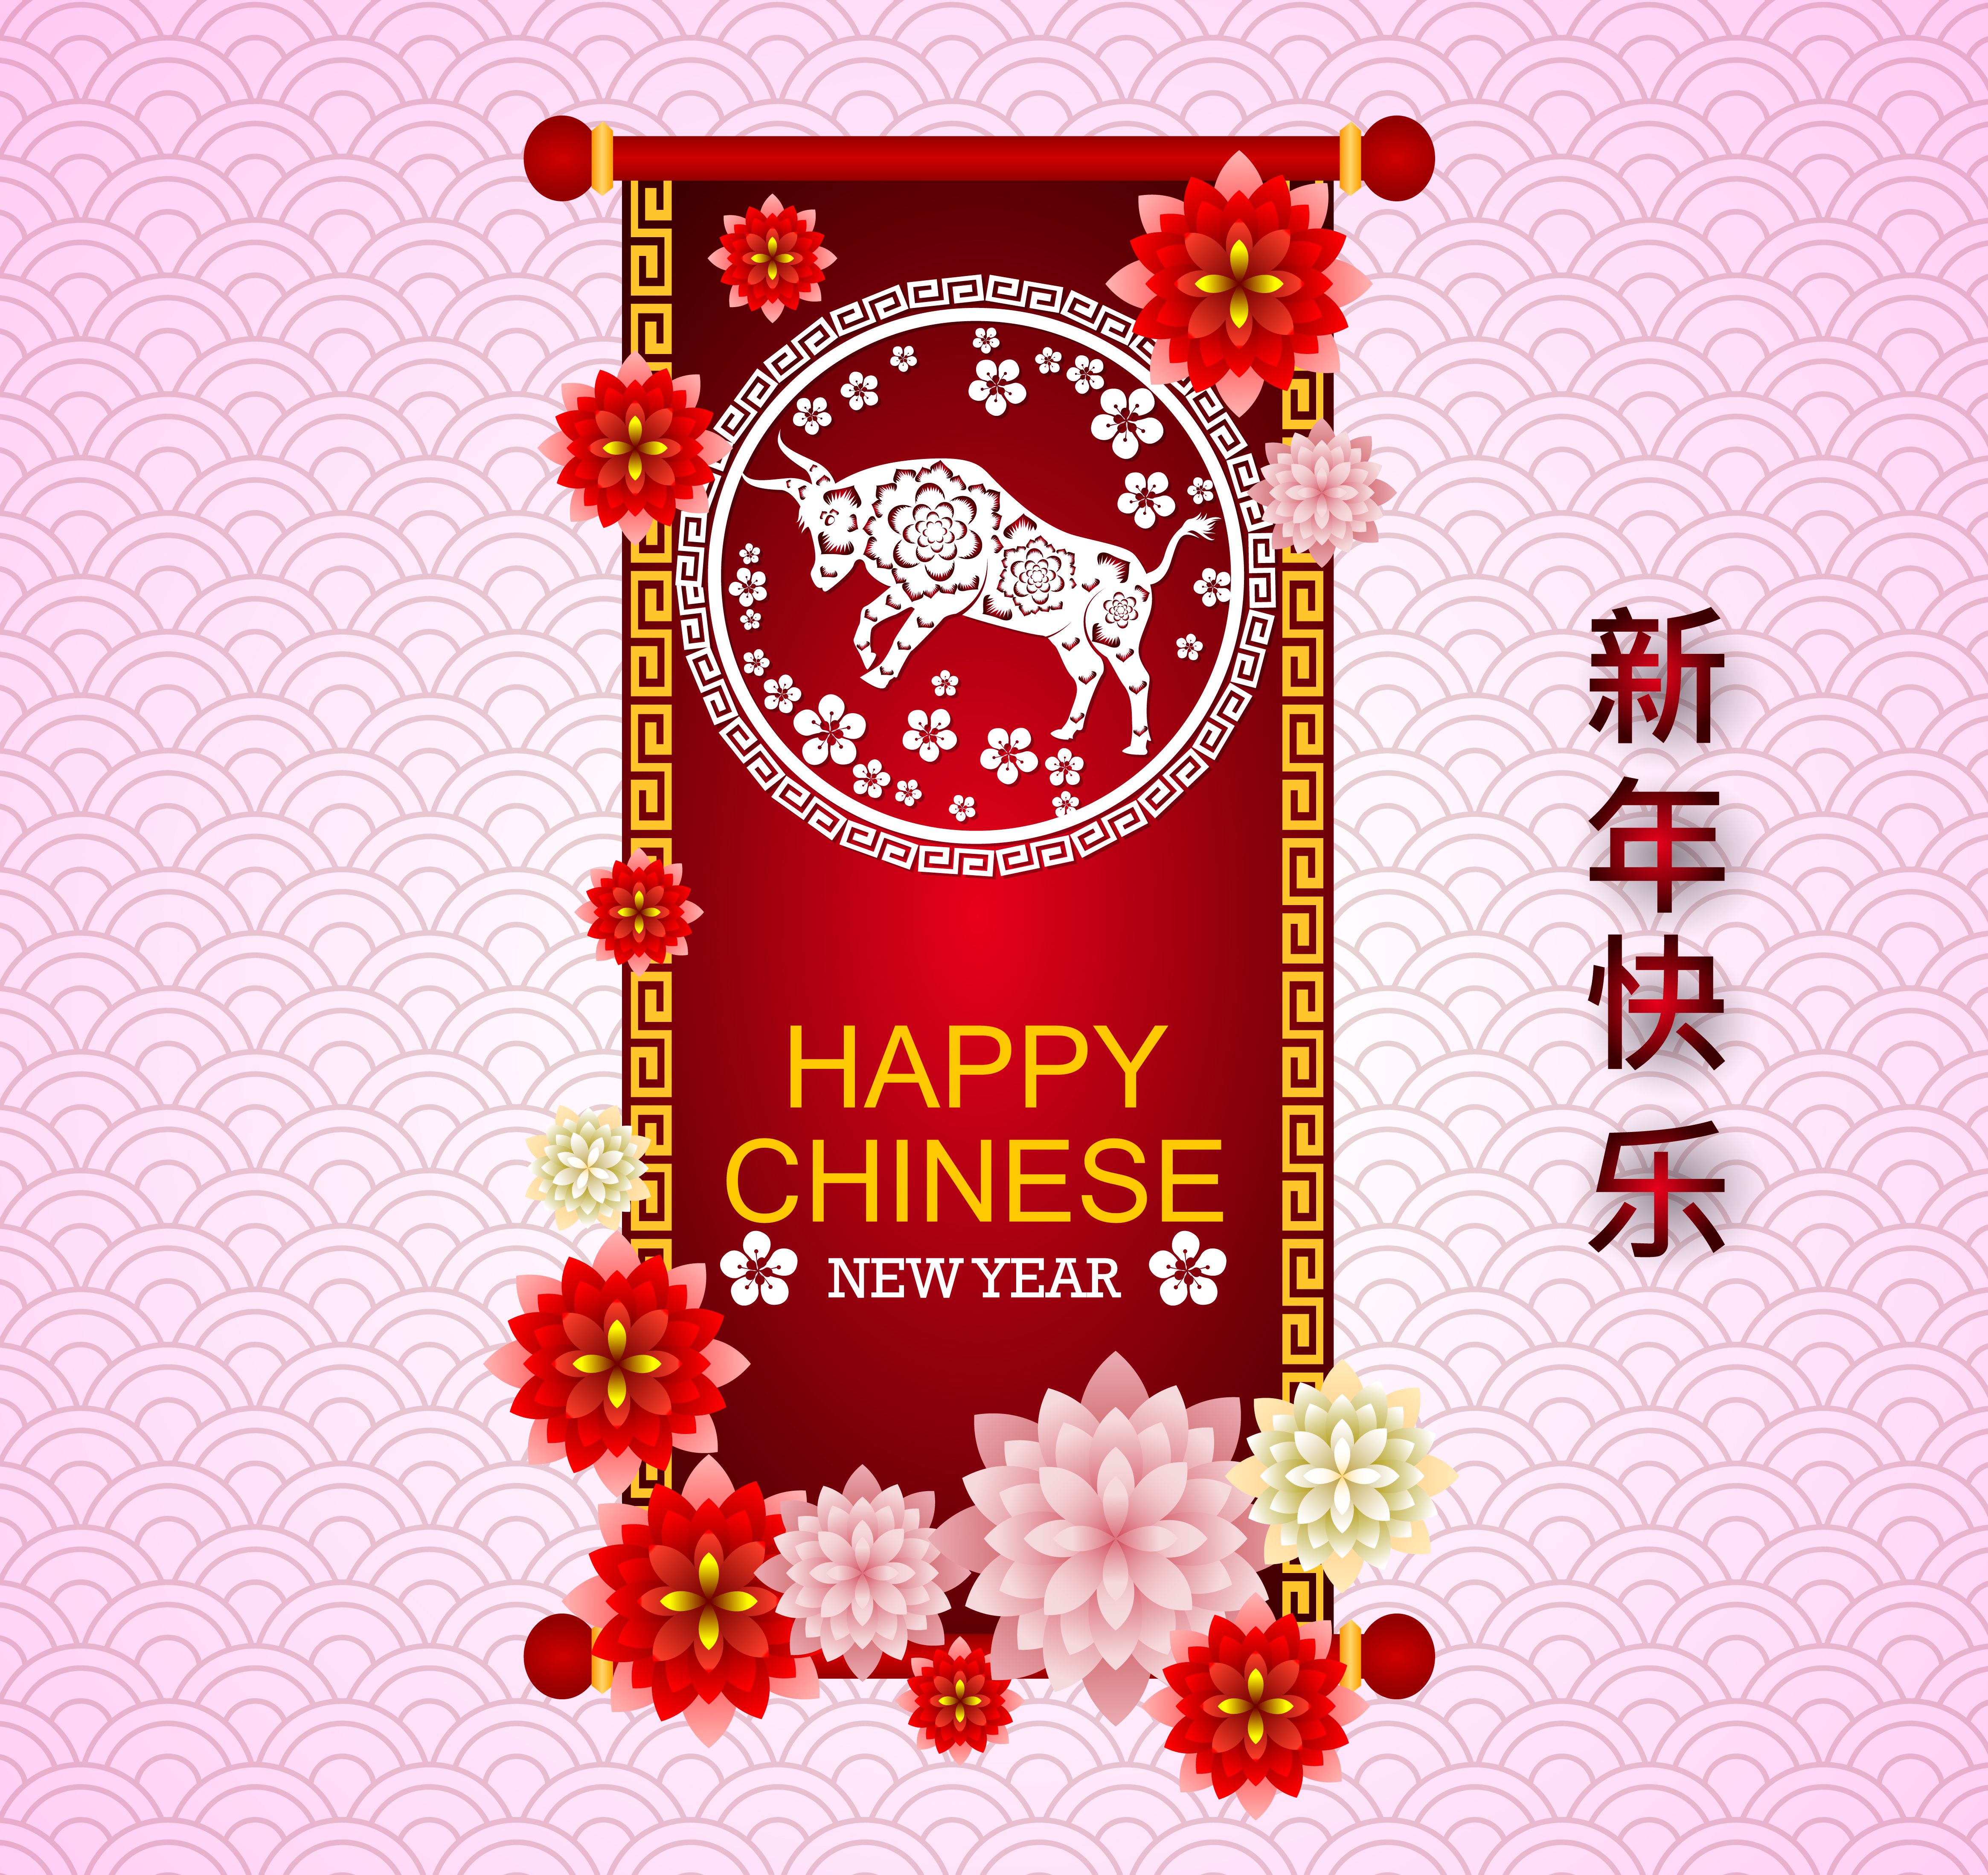 Happy Chinese New Year 2021 .vecteezy.com